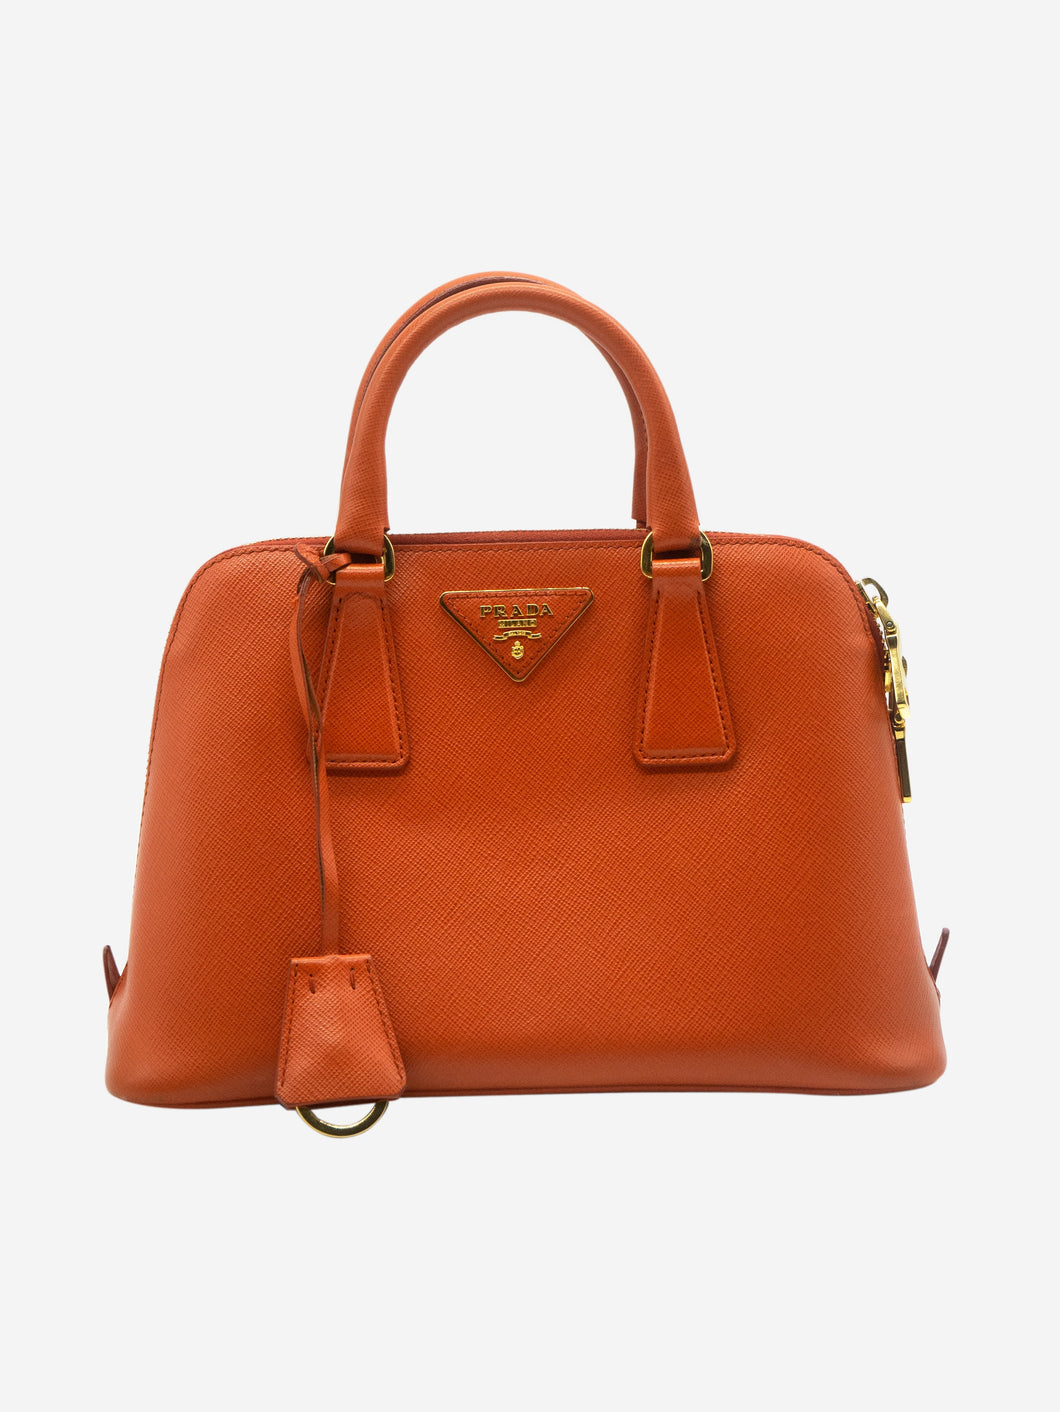 Orange saffiano leather handbag with gold hardware Top Handle Bags Prada 